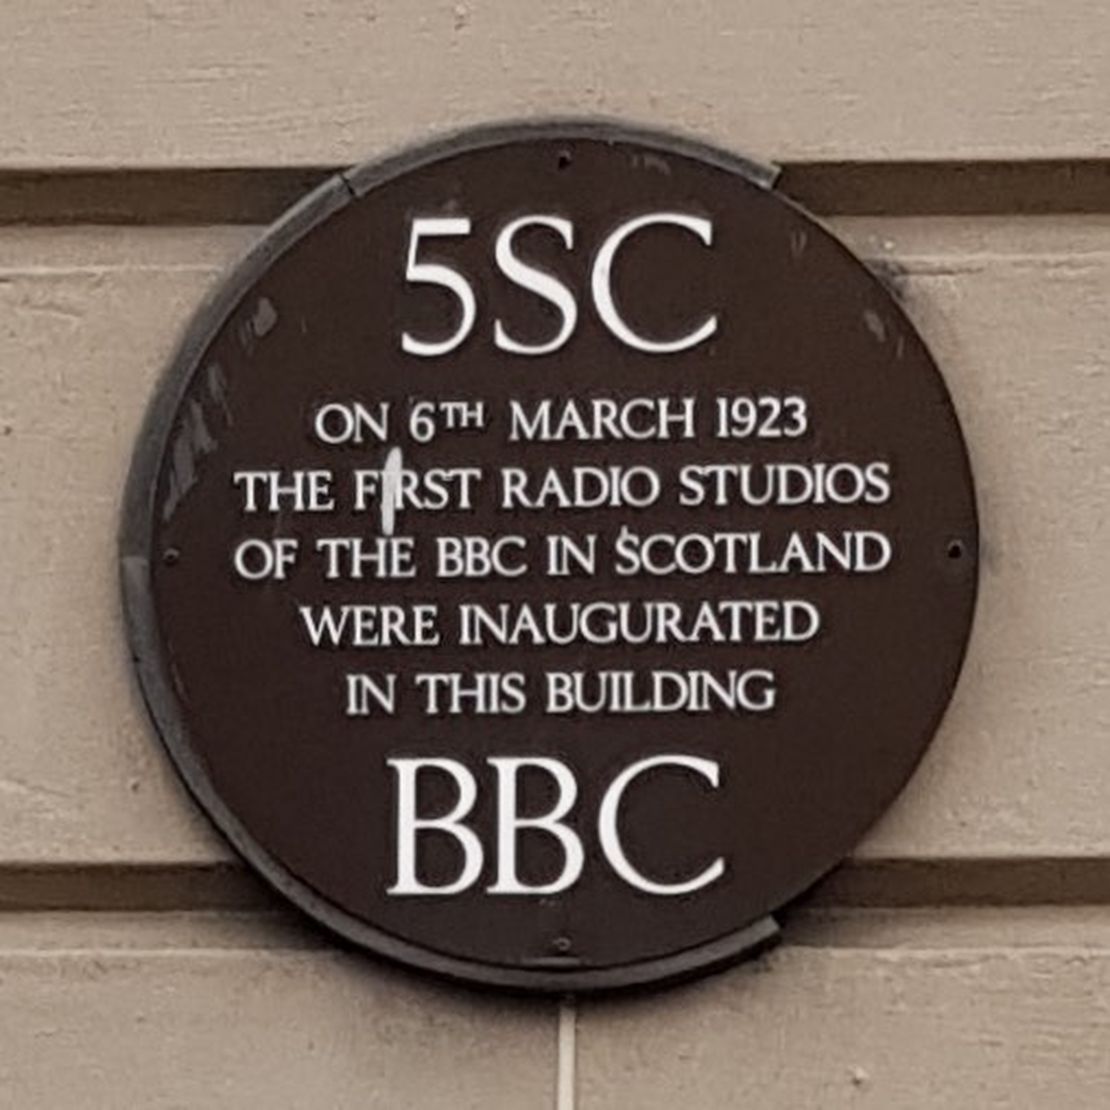 BBC Scotland founded